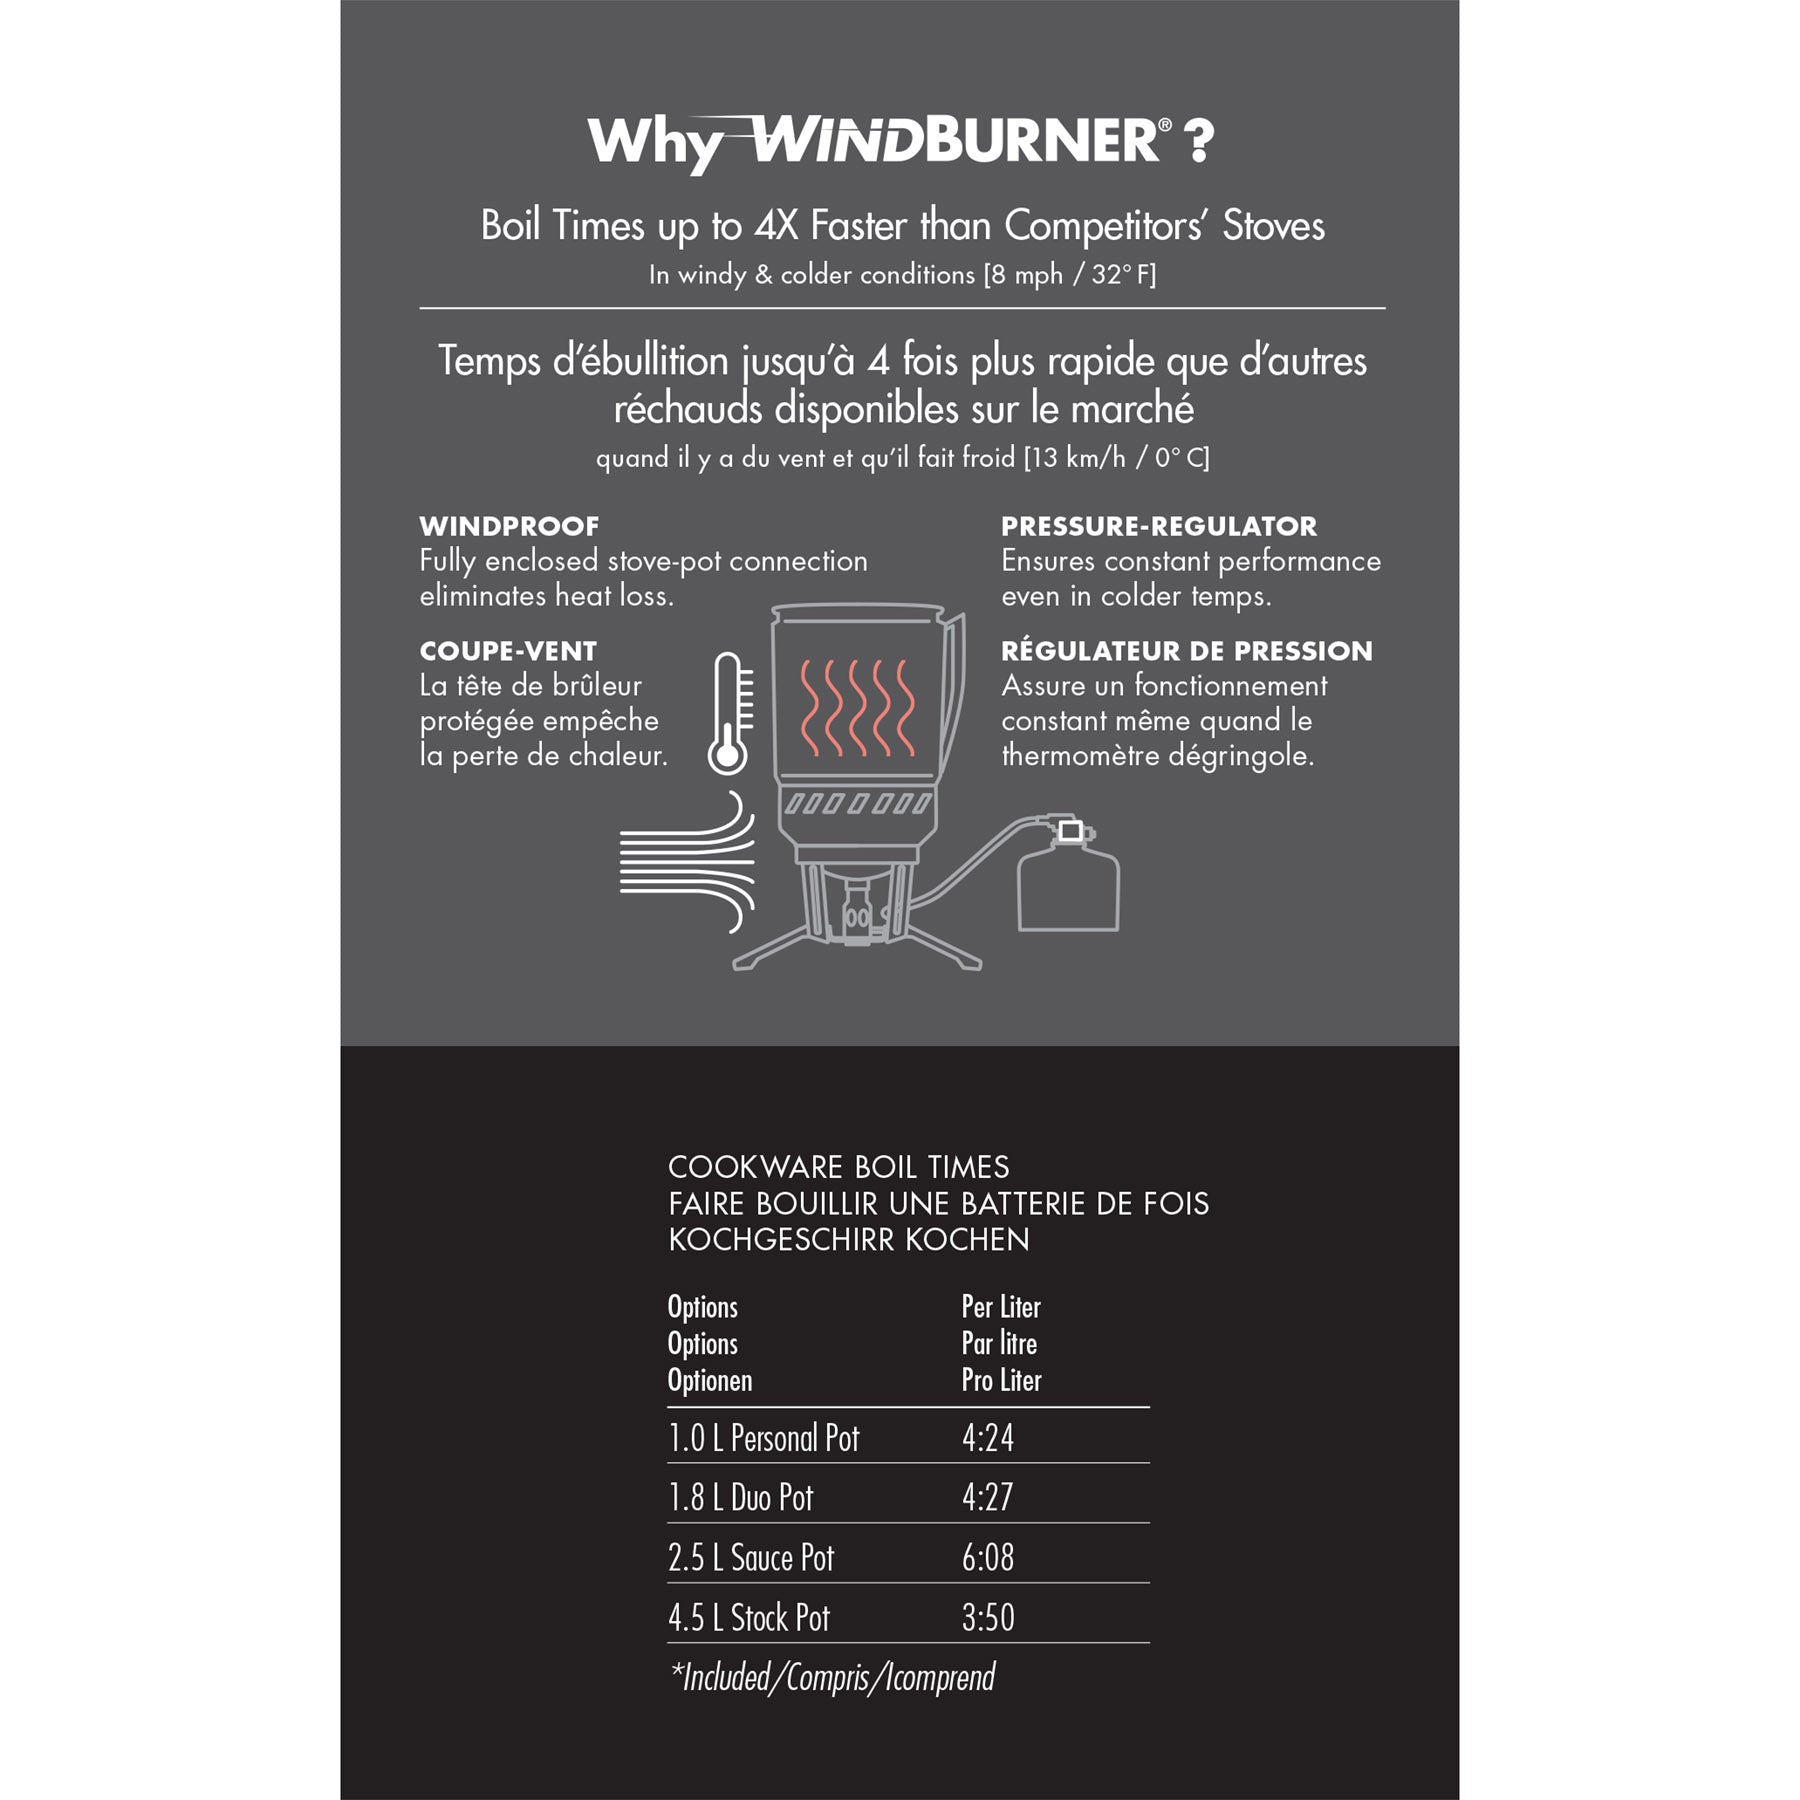 windburner product info card